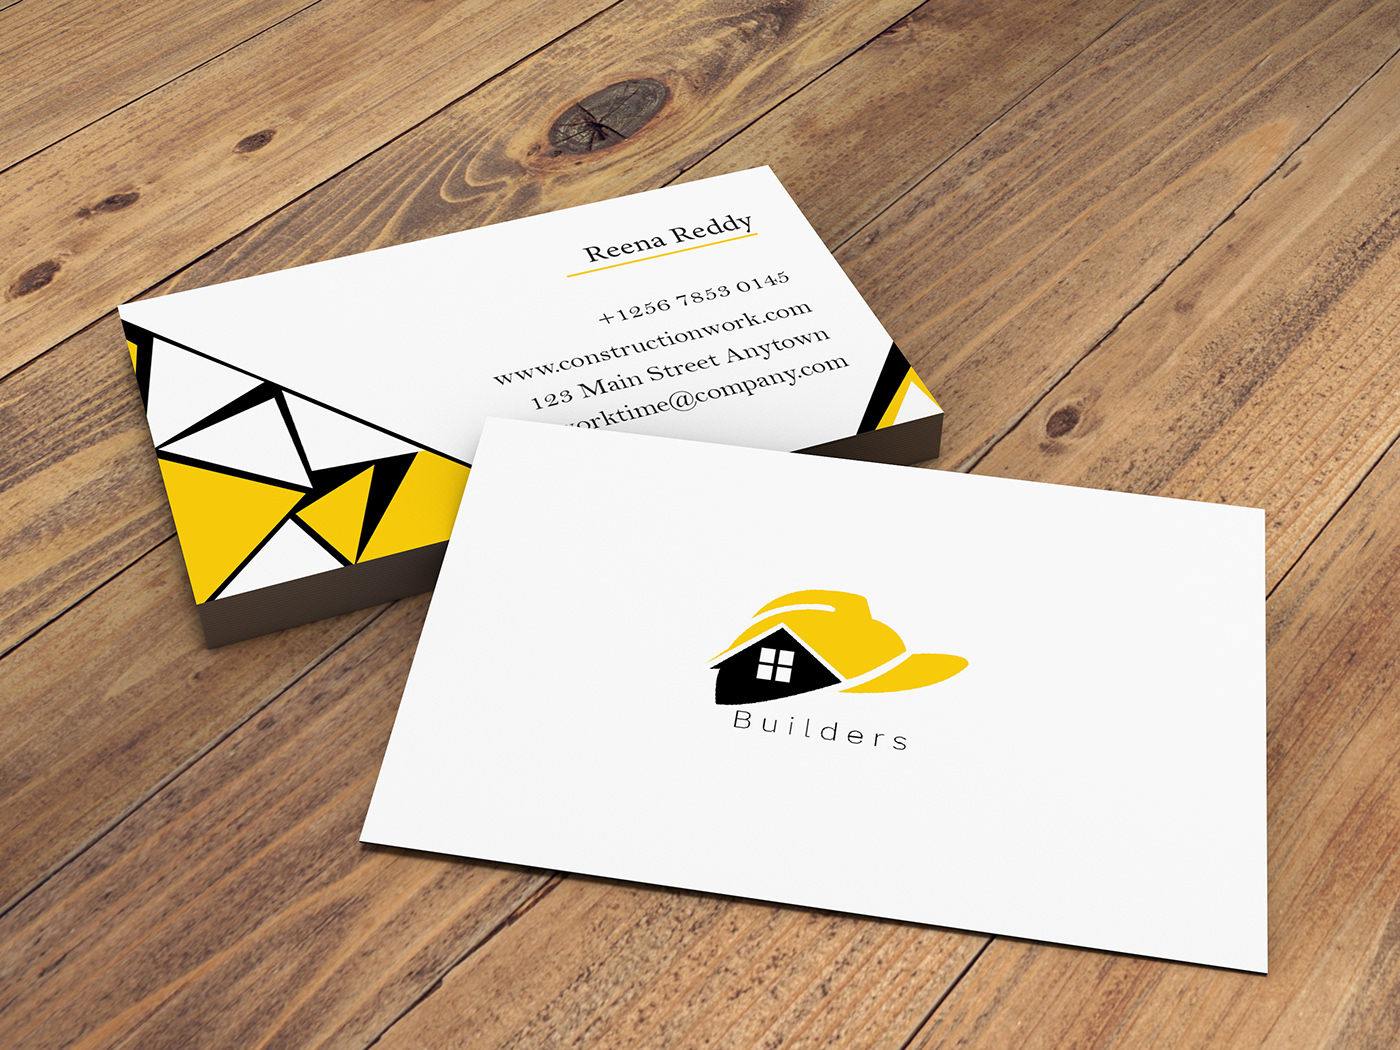 graphicdesigner adobe illustrator design logo letterhead greeting card envelope ALLDESIGN constructionproject marketsurvey